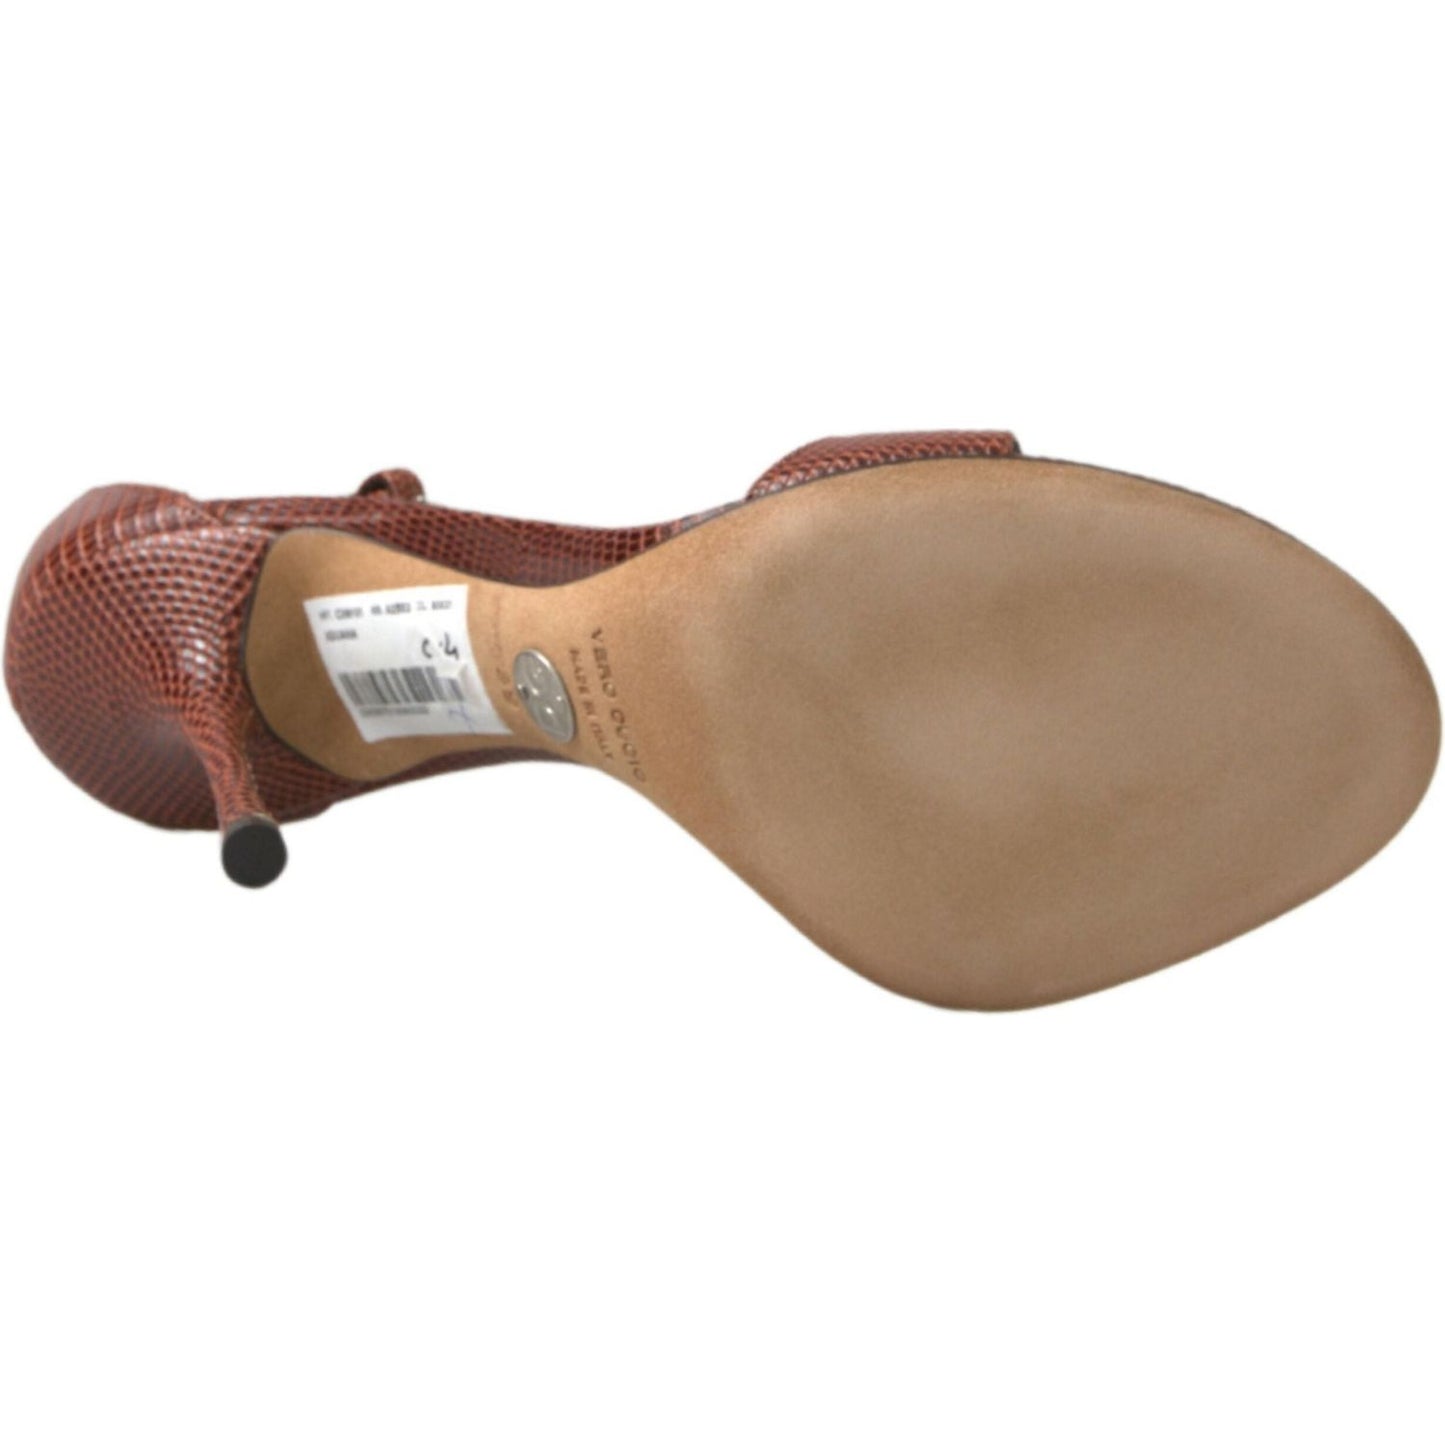 Dolce & Gabbana Elegant Strappy Leather Heels Sandals brown-leather-high-heels-sandals-shoes 465A0204-scaled-fc9f0348-96b.jpg